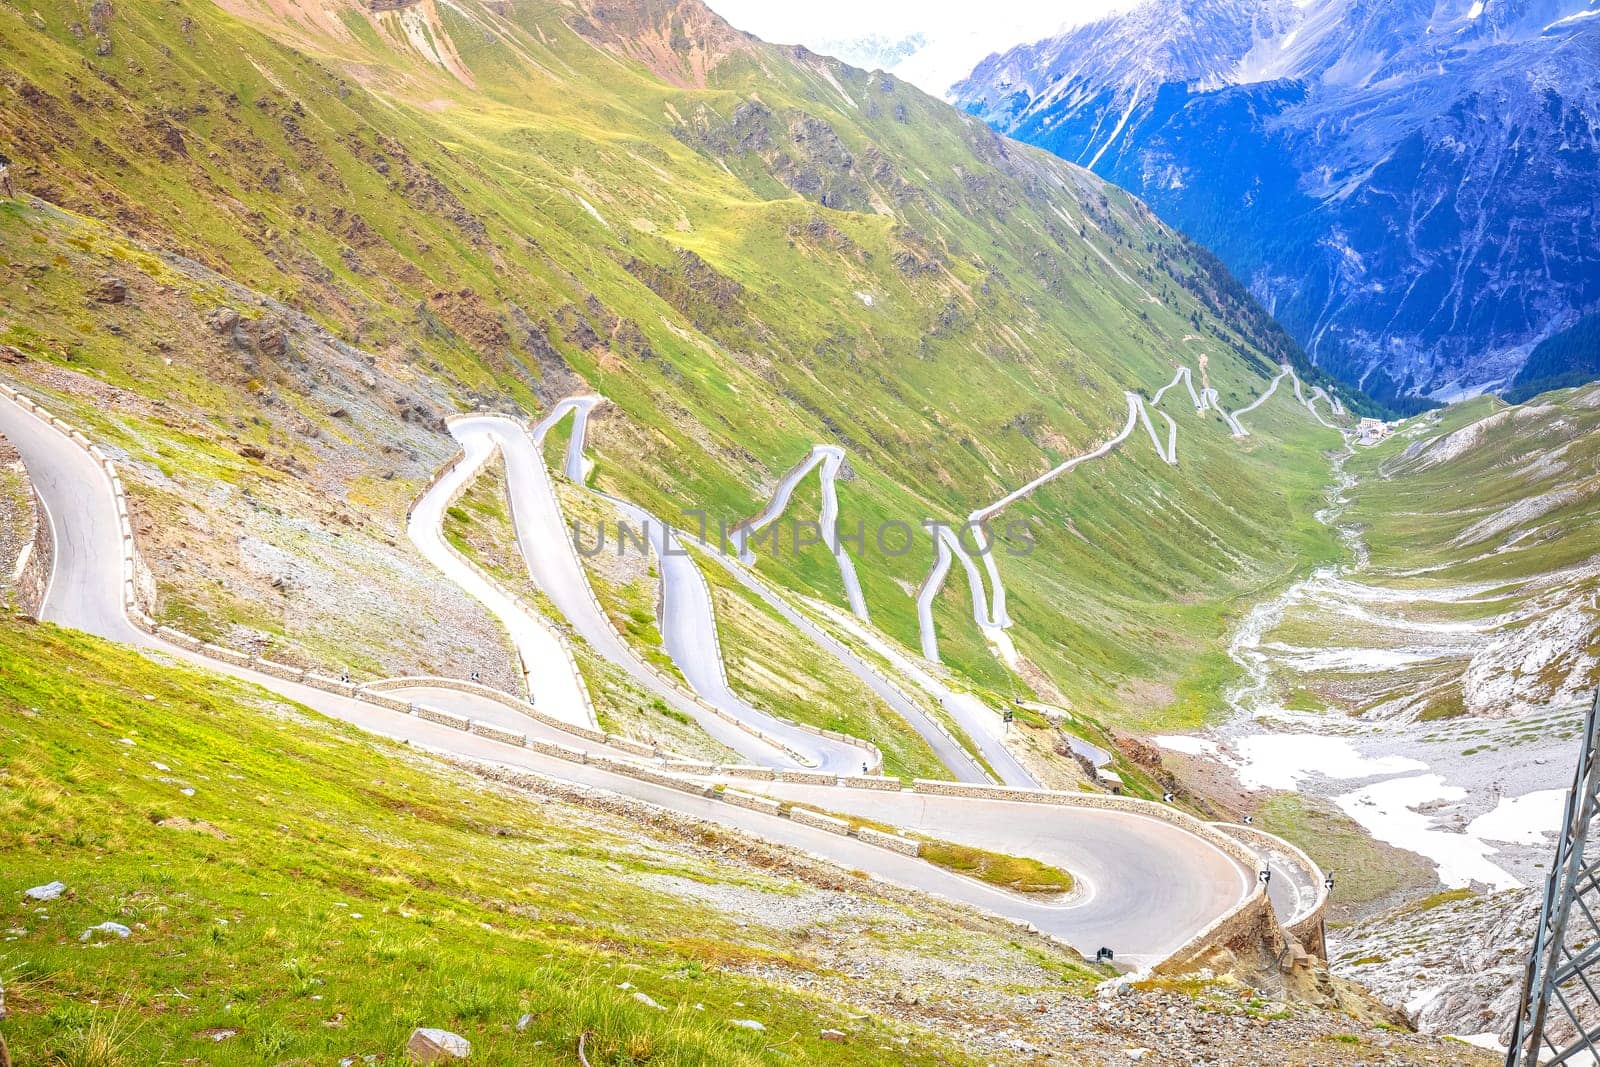 Stelvio mountain pass or Stilfser Joch scenic road serpentines view, border of Italy and Switzerland